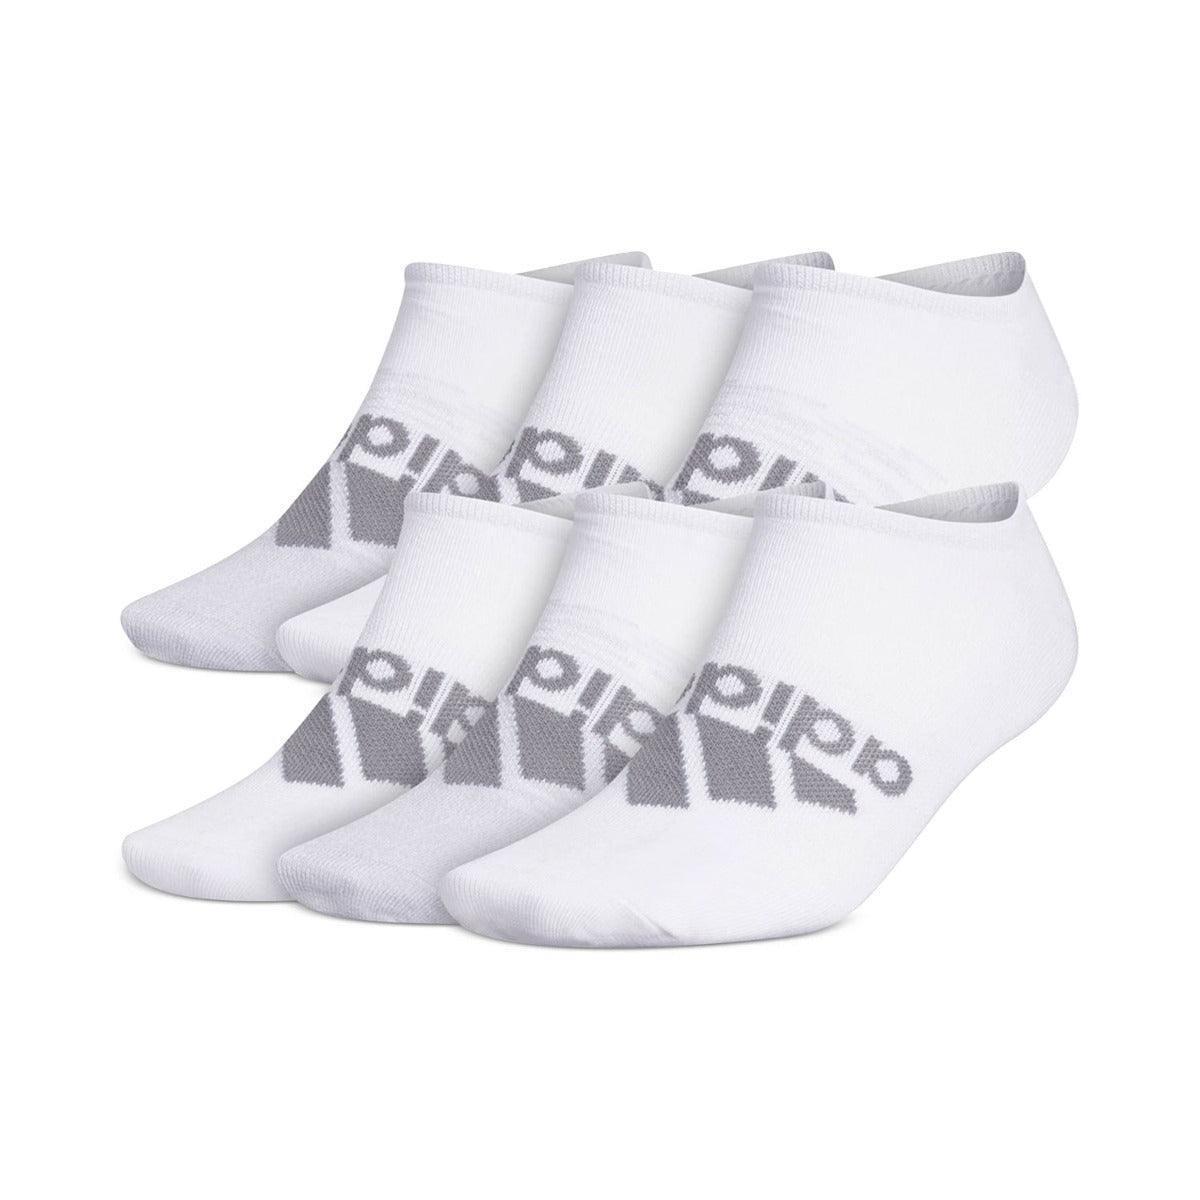 Adidas Athletic Superlite No Show Socks (6 Pairs) - One Size